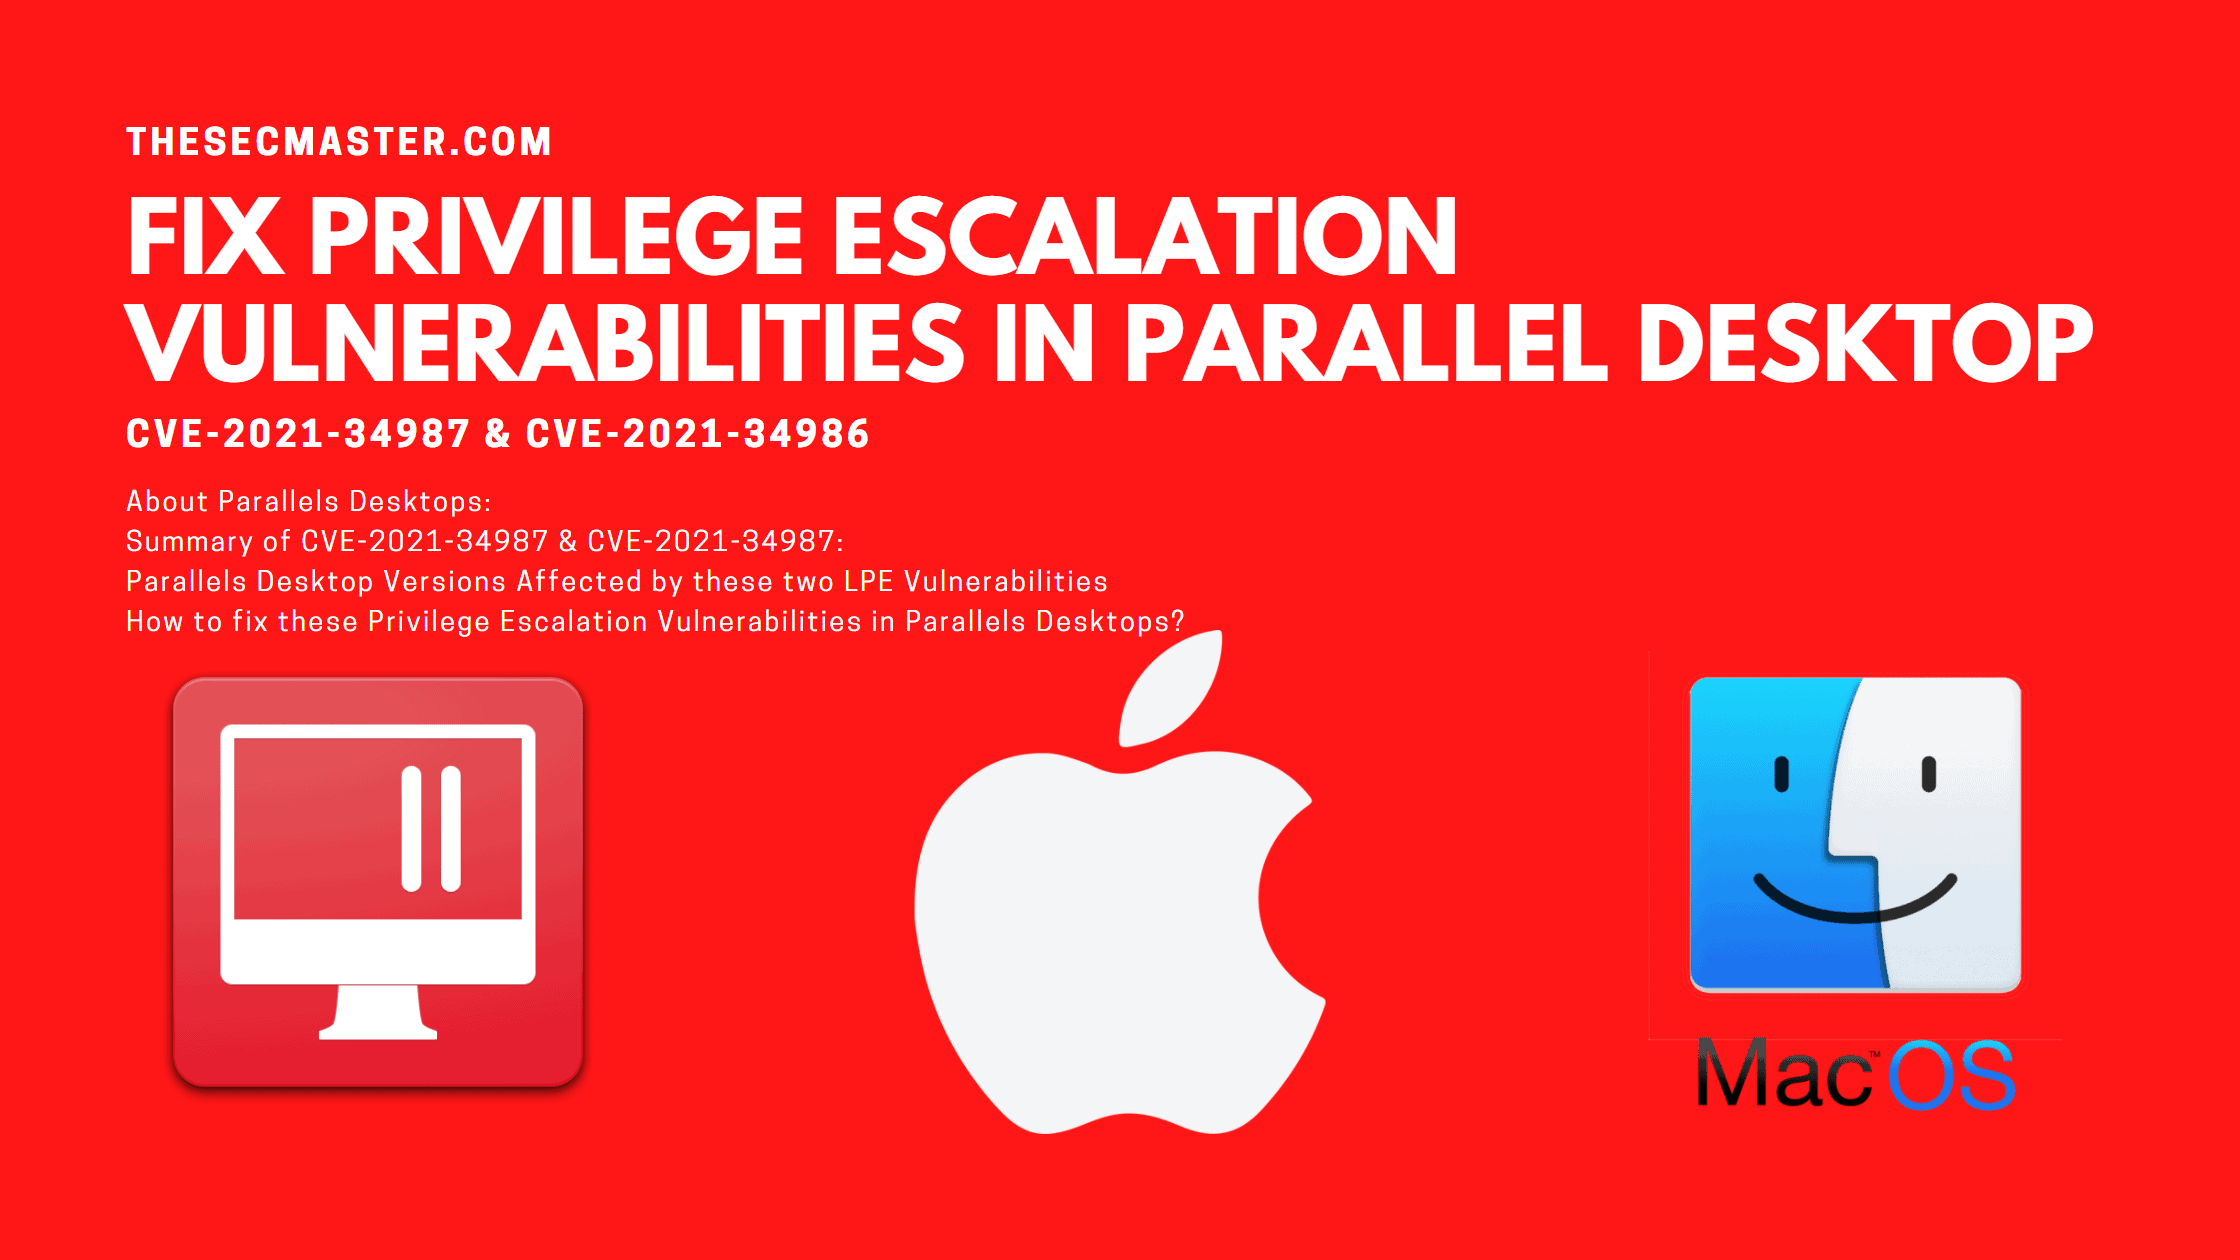 Fix These Privilege Escalation Vulnerabilities In Parallel Desktop